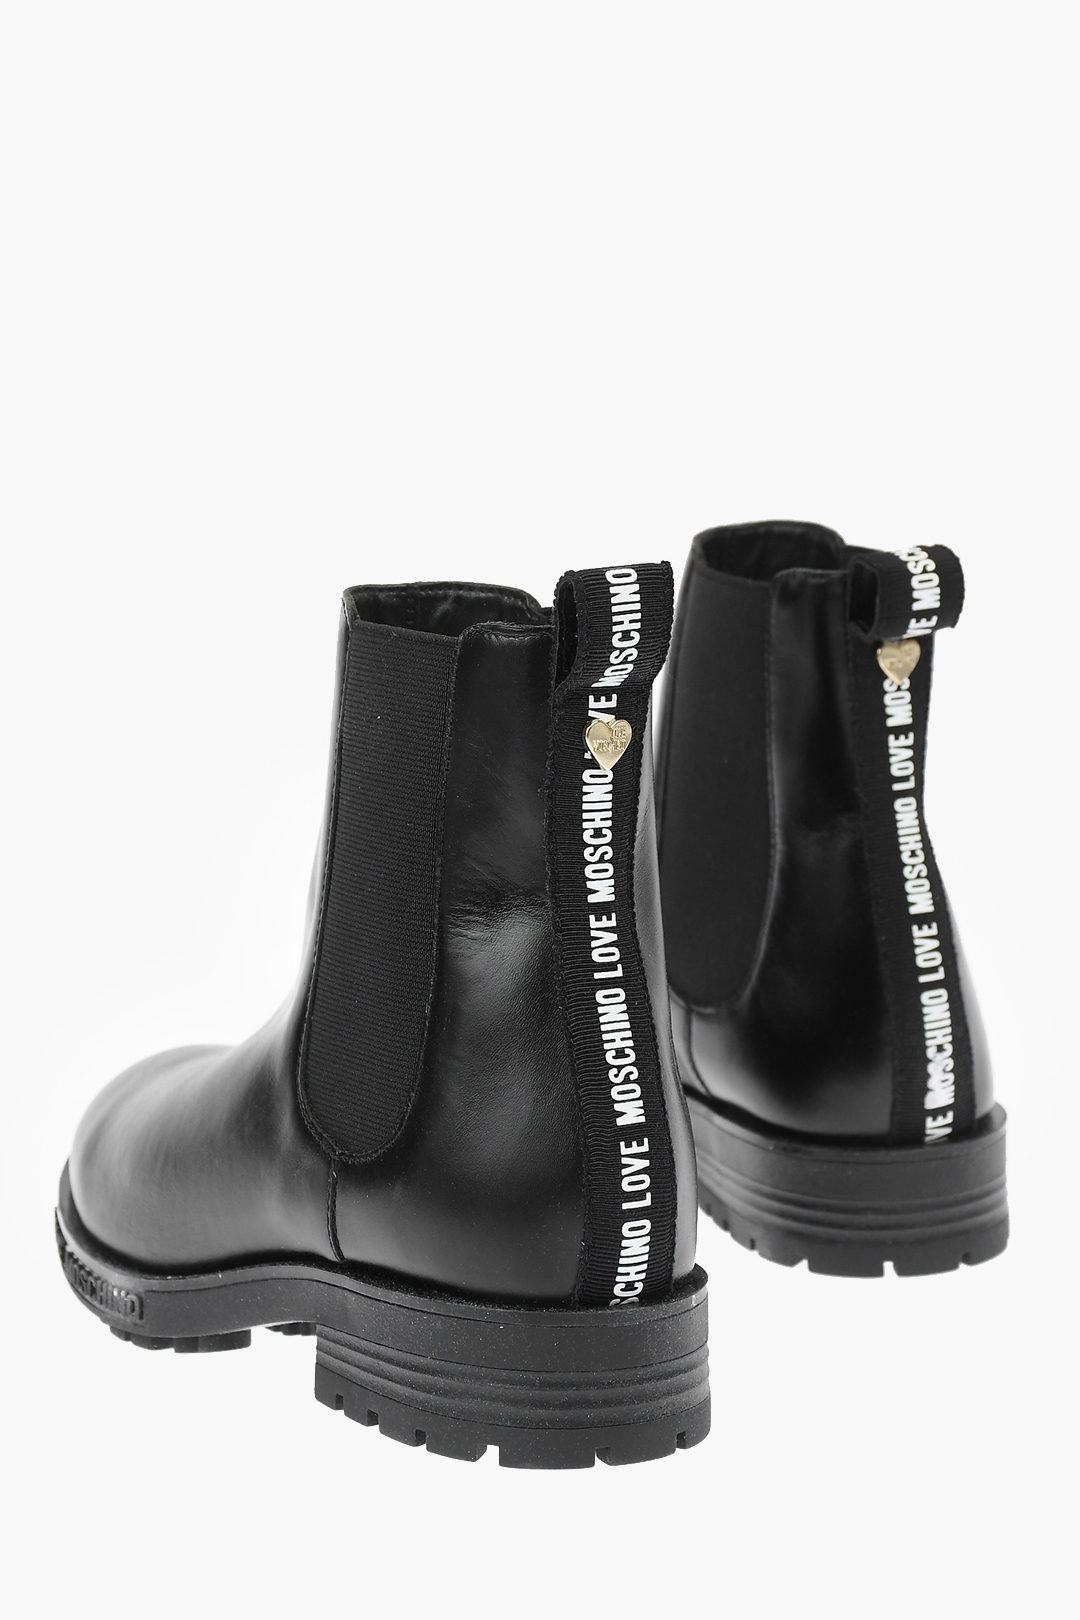 microscoop Tienerjaren Duwen Moschino LOVE Leather Chelsea Ankle Boot women - Glamood Outlet